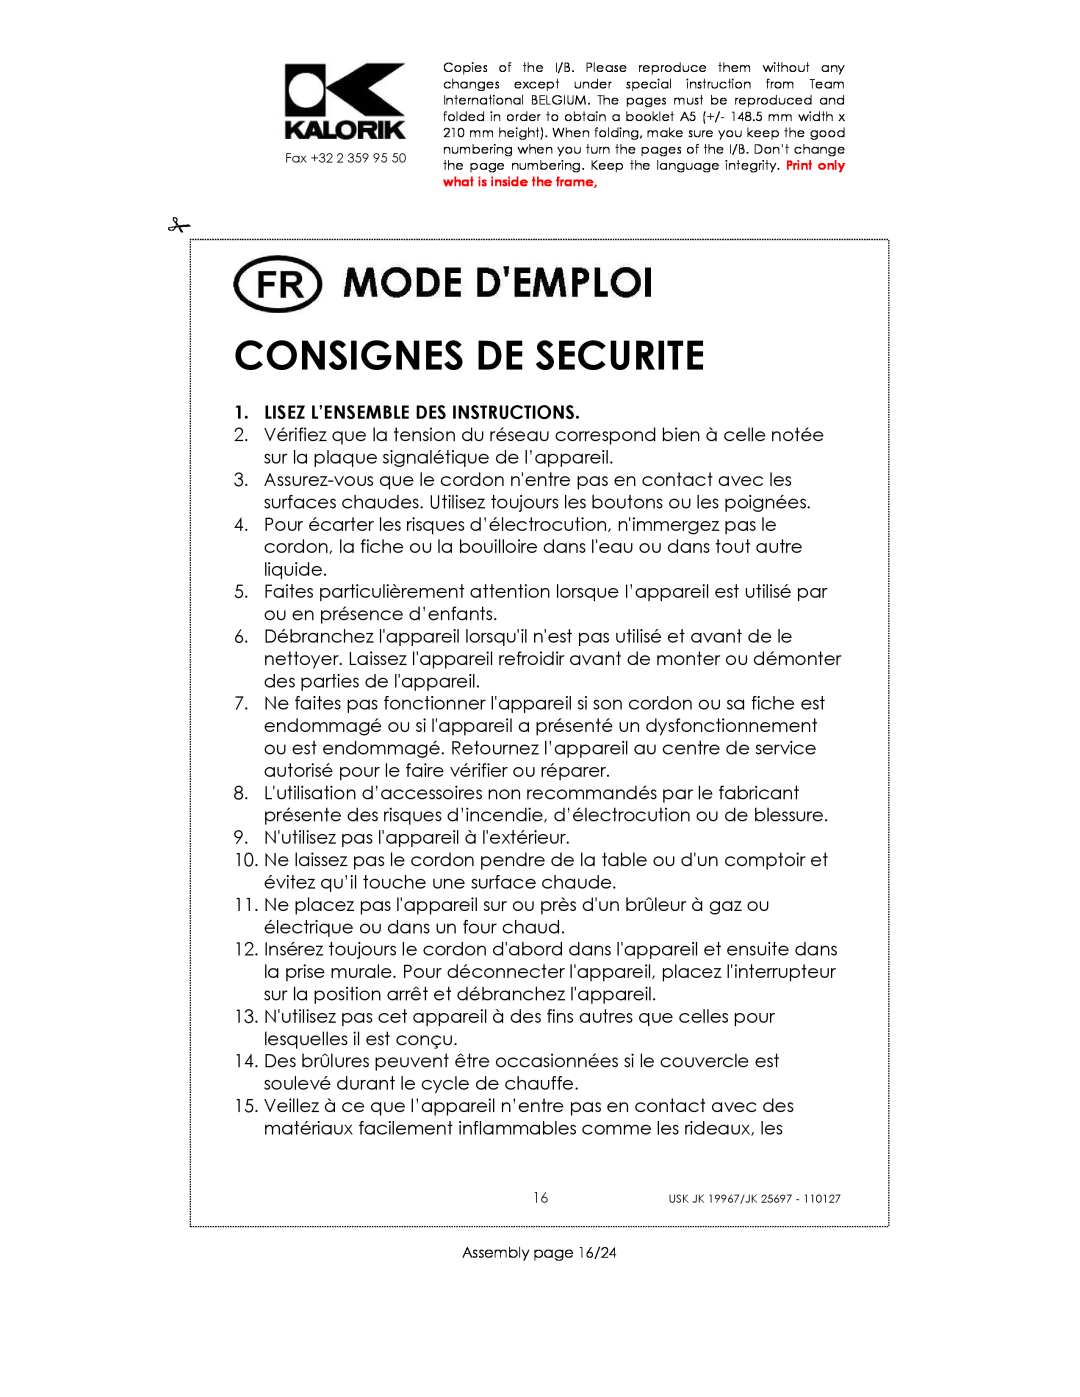 Kalorik JK 19967, JK 25697 manual Consignes De Securite, Lisez L’Ensemble Des Instructions 